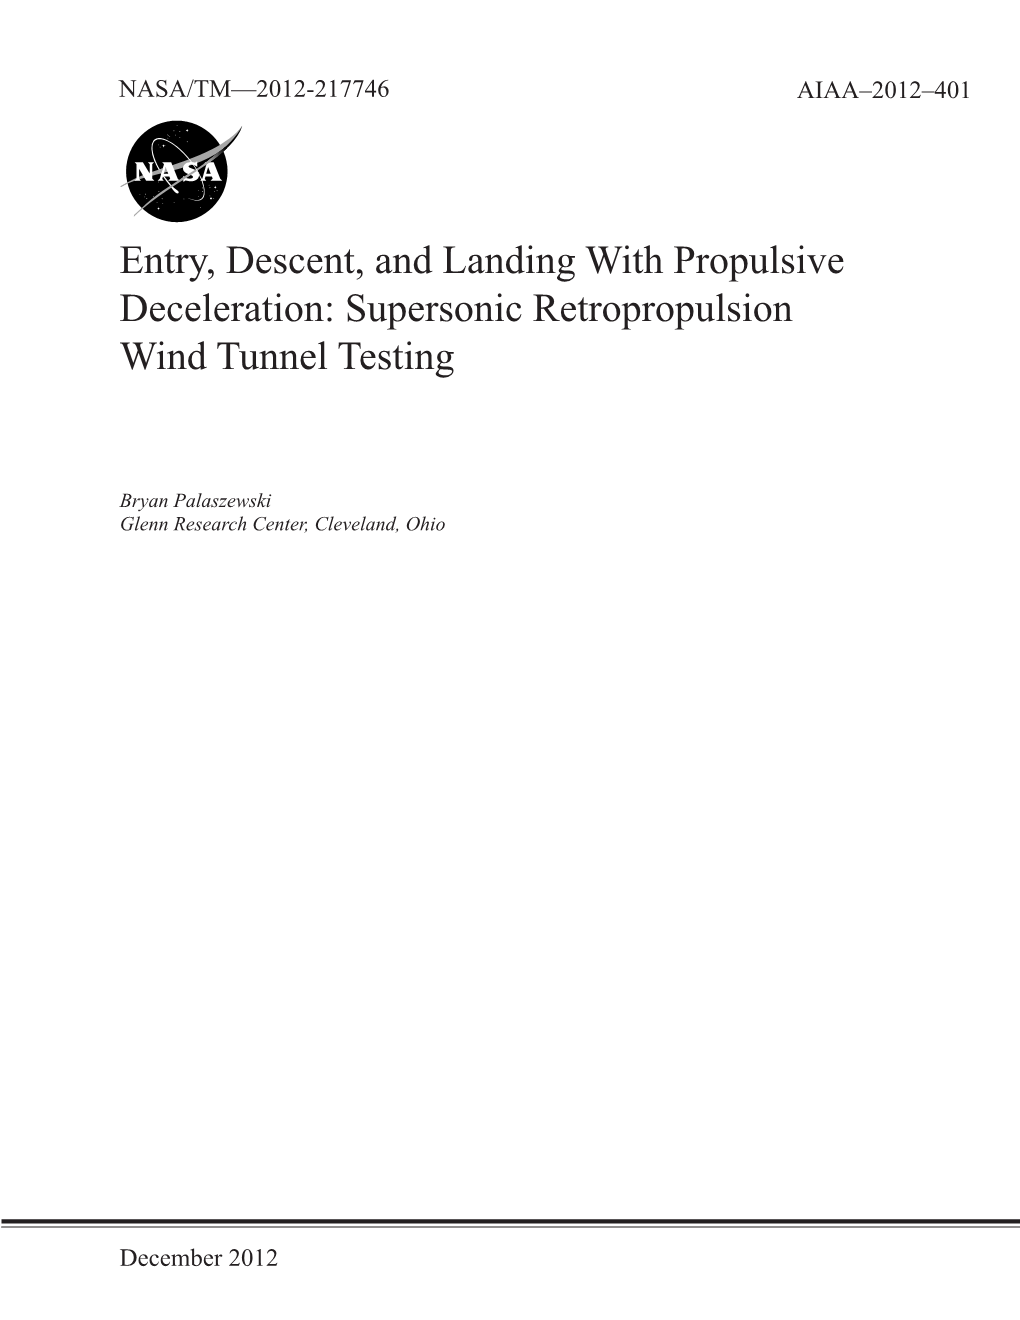 Supersonic Retropropulsion Wind Tunnel Testing